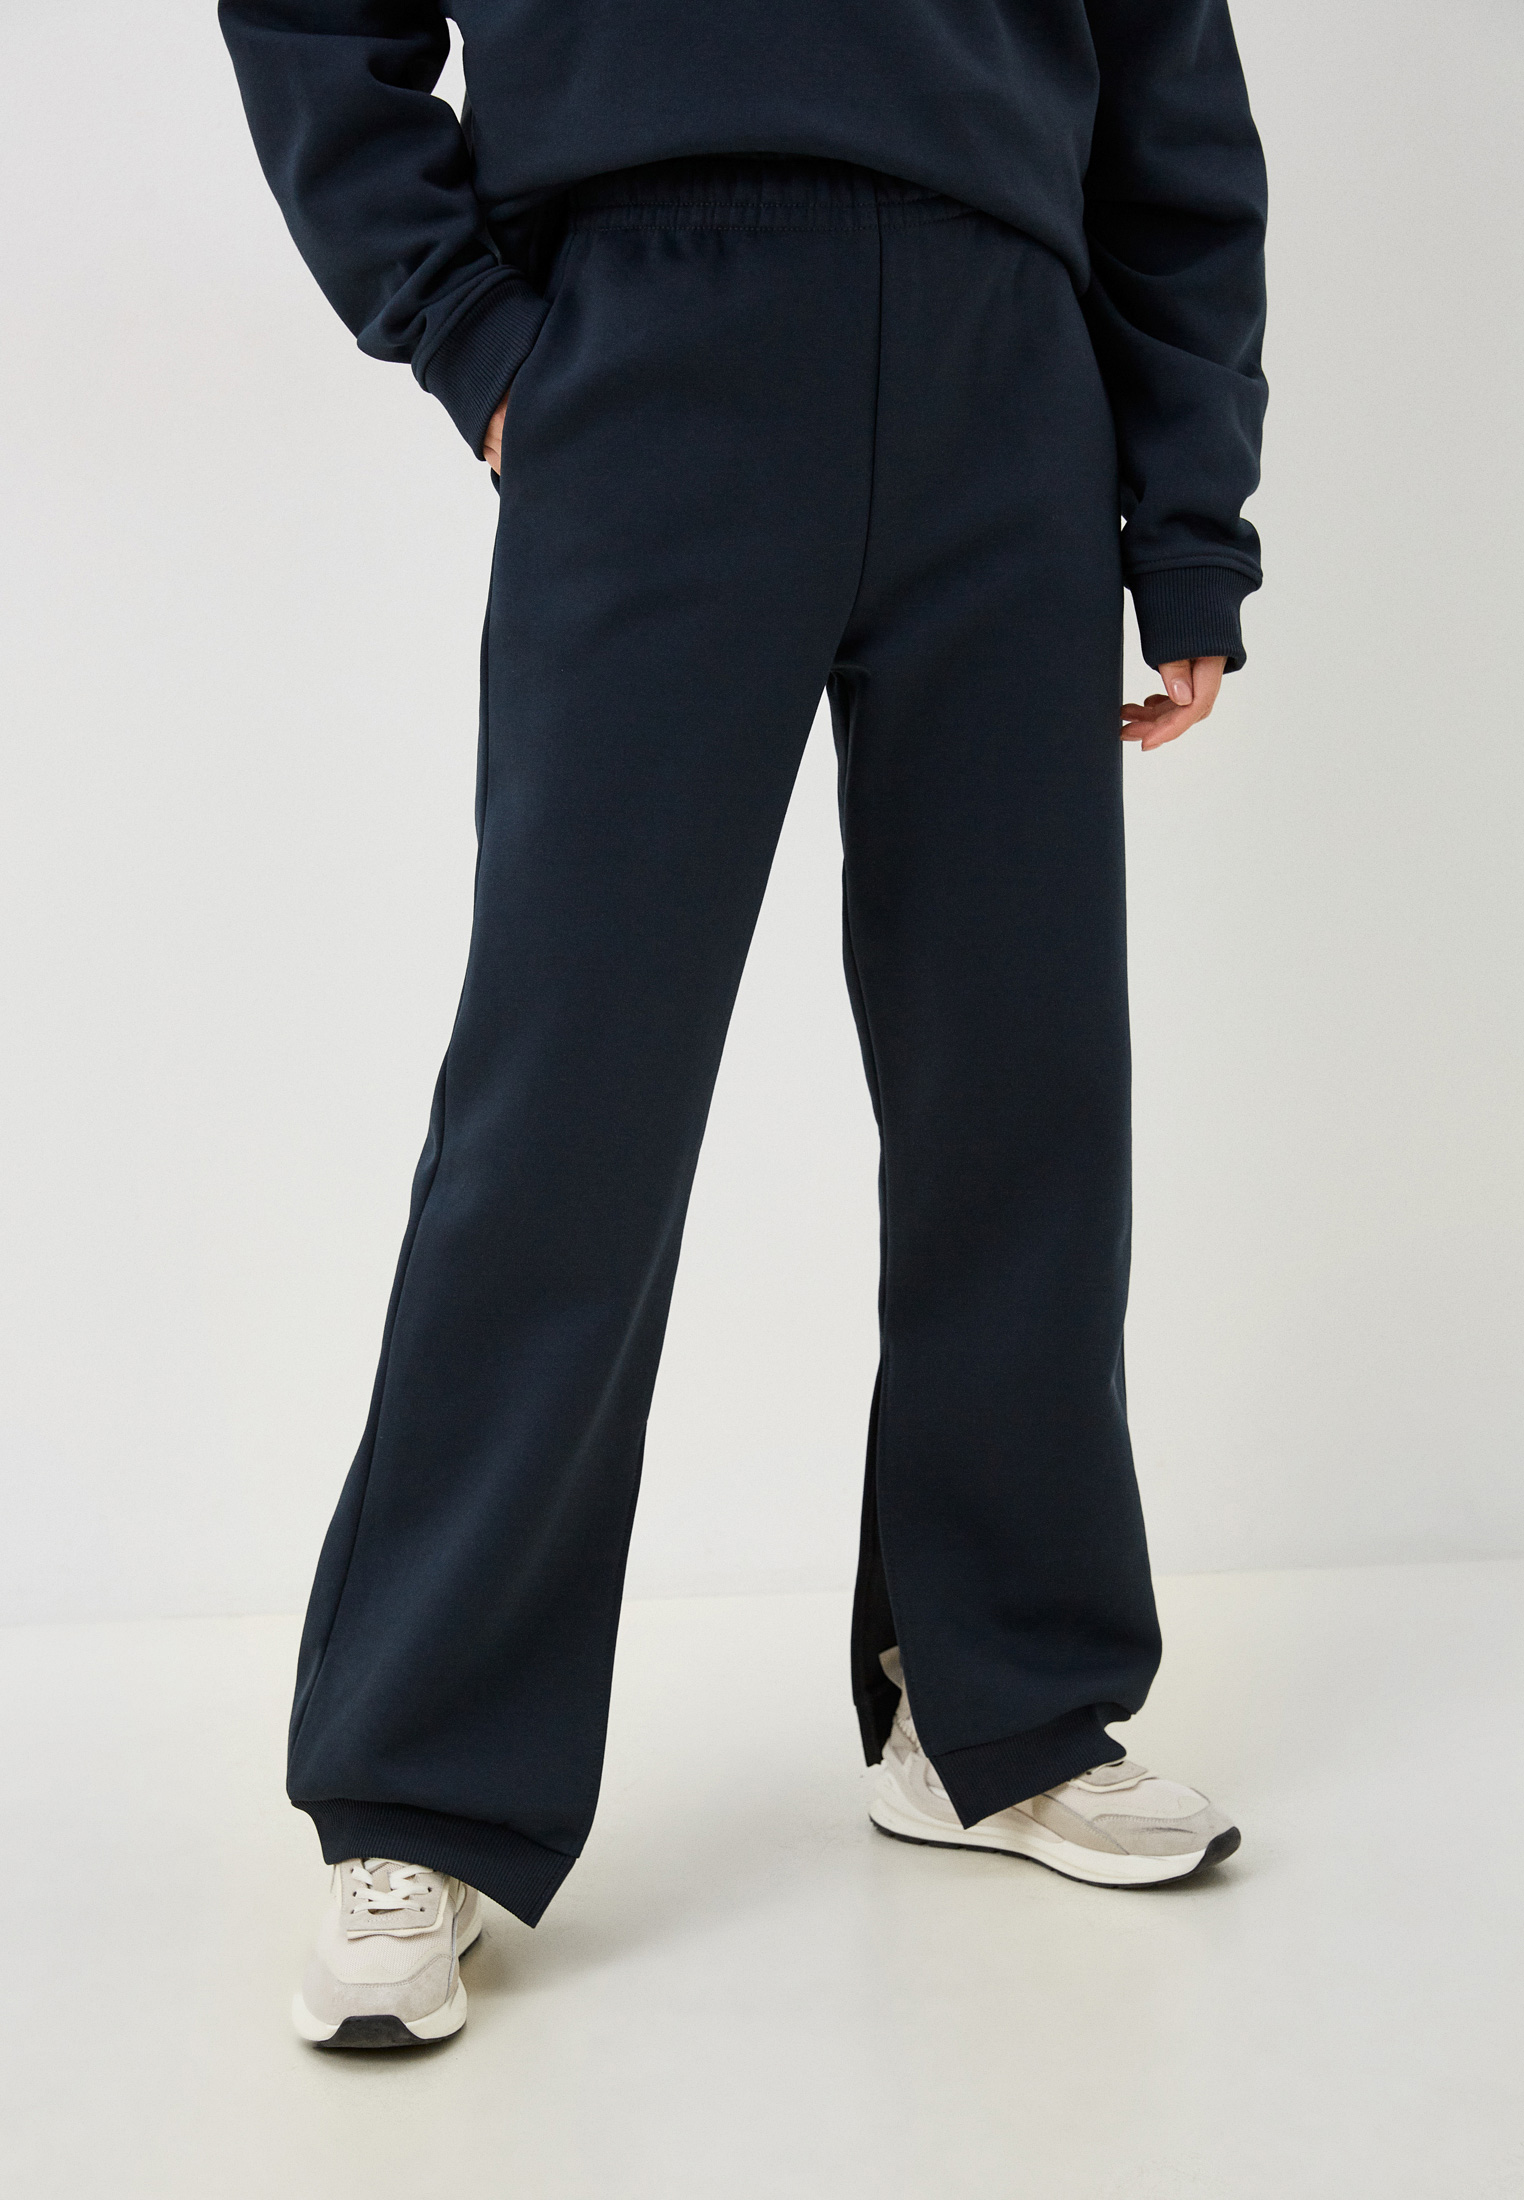 Женские брюки Irnby LG24-1804